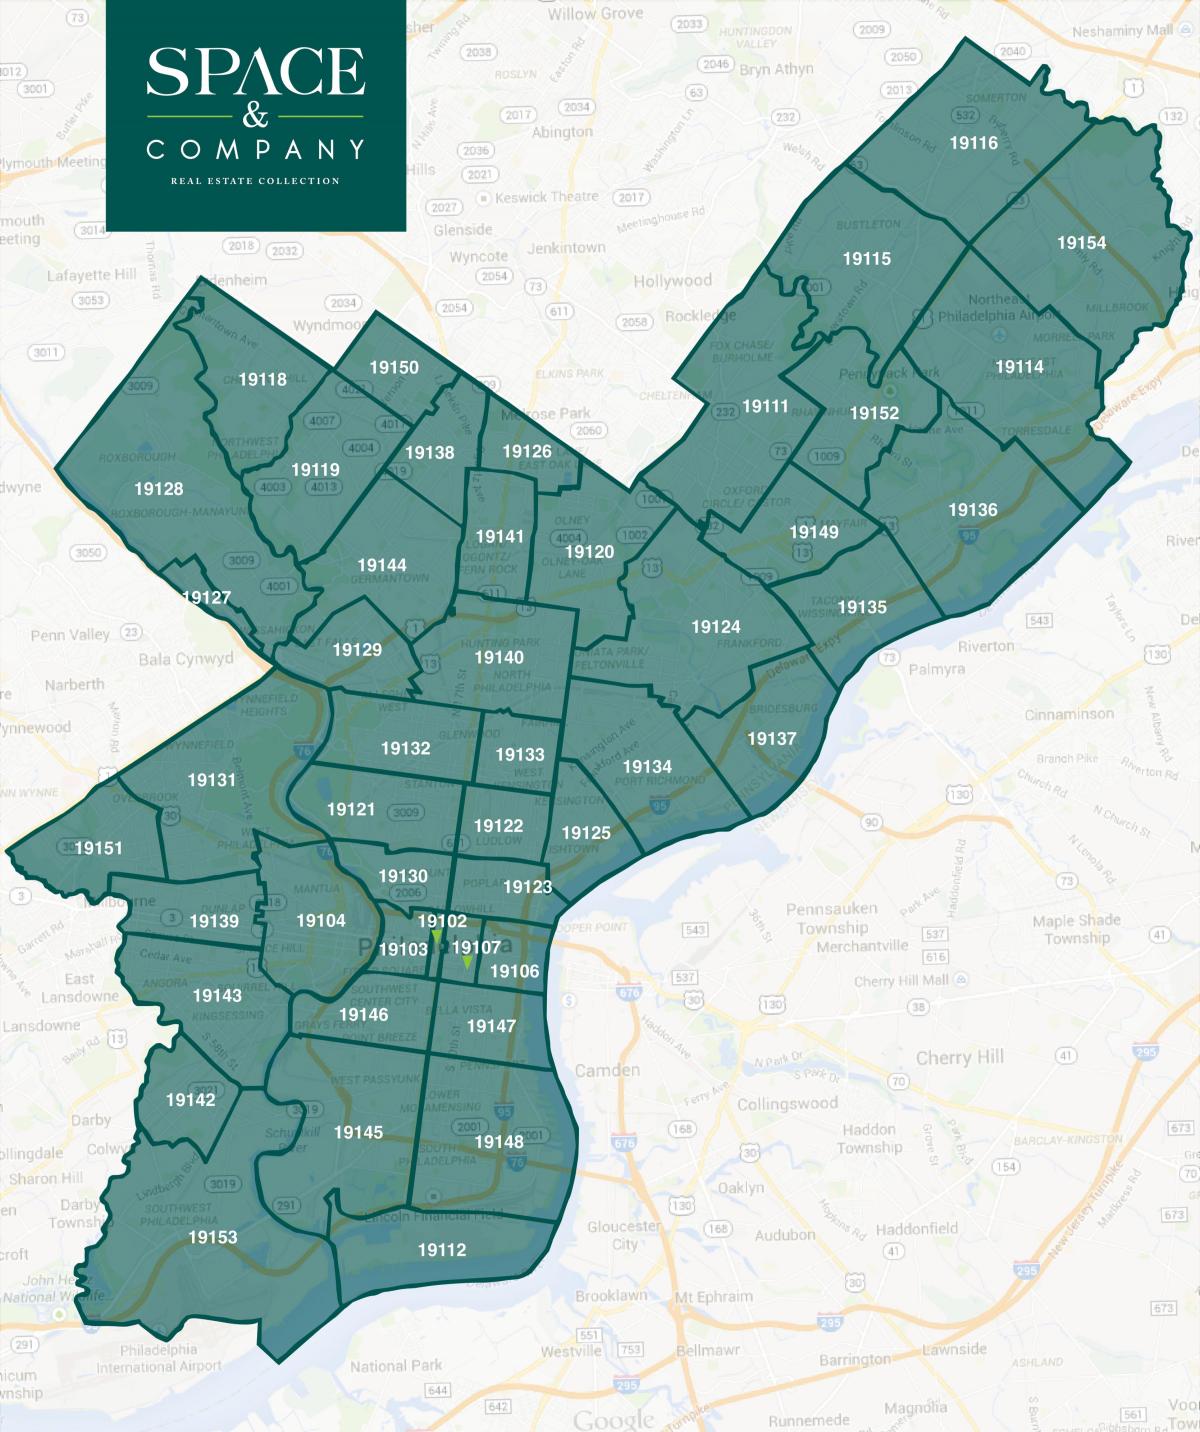 mapa okolic Filadelfii i zip kody